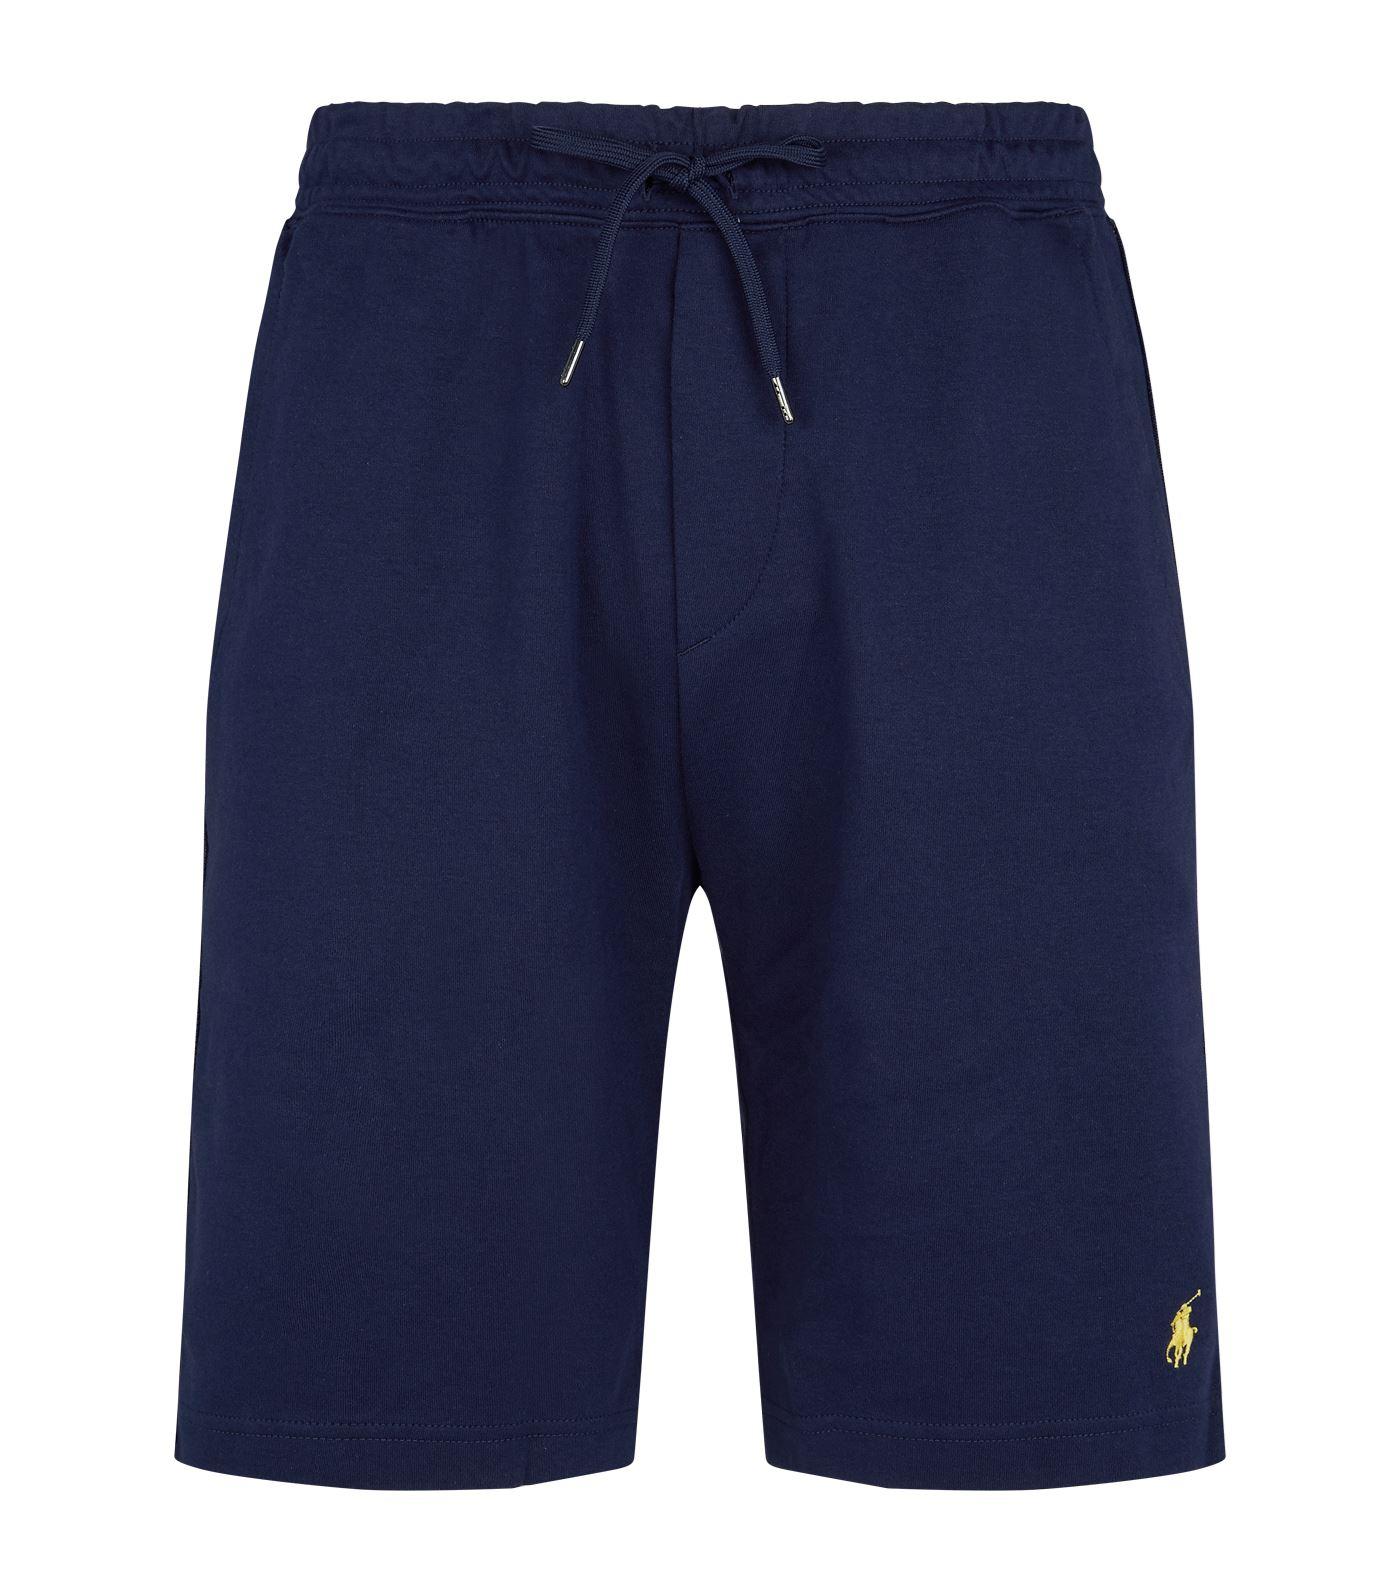 Polo Ralph Lauren Logo Tape Sweat Shorts in Blue for Men - Lyst